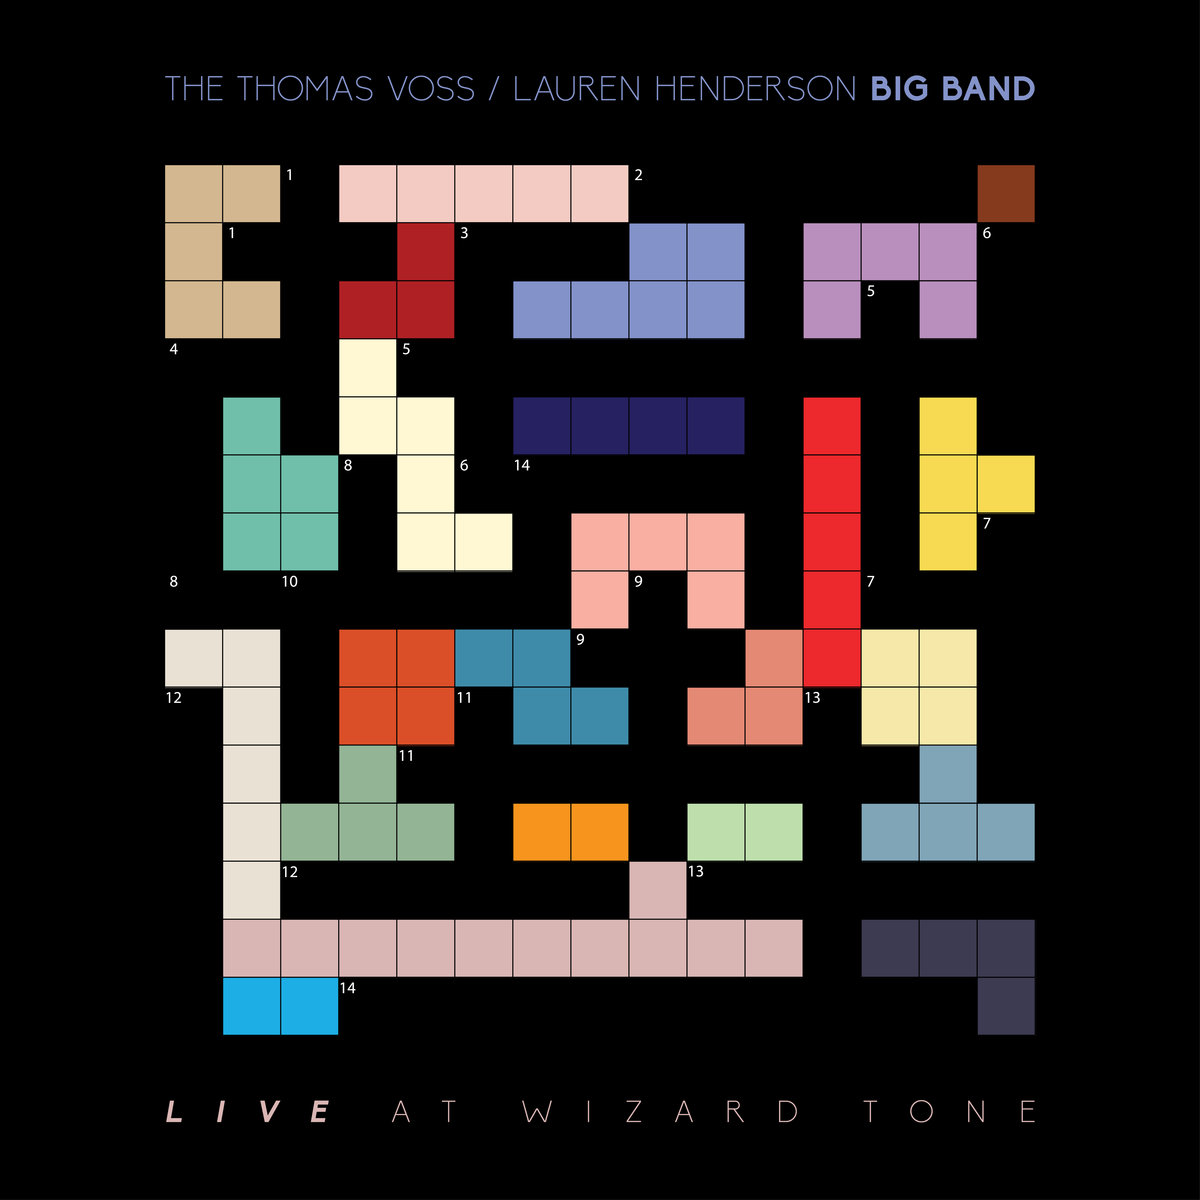 Thomas Voss/Lauren Henderson Big Band - "Live at Wizard Tone" [Recorded &amp; Mixed (JB &amp; Tom Barnes), Mastered (JP)]